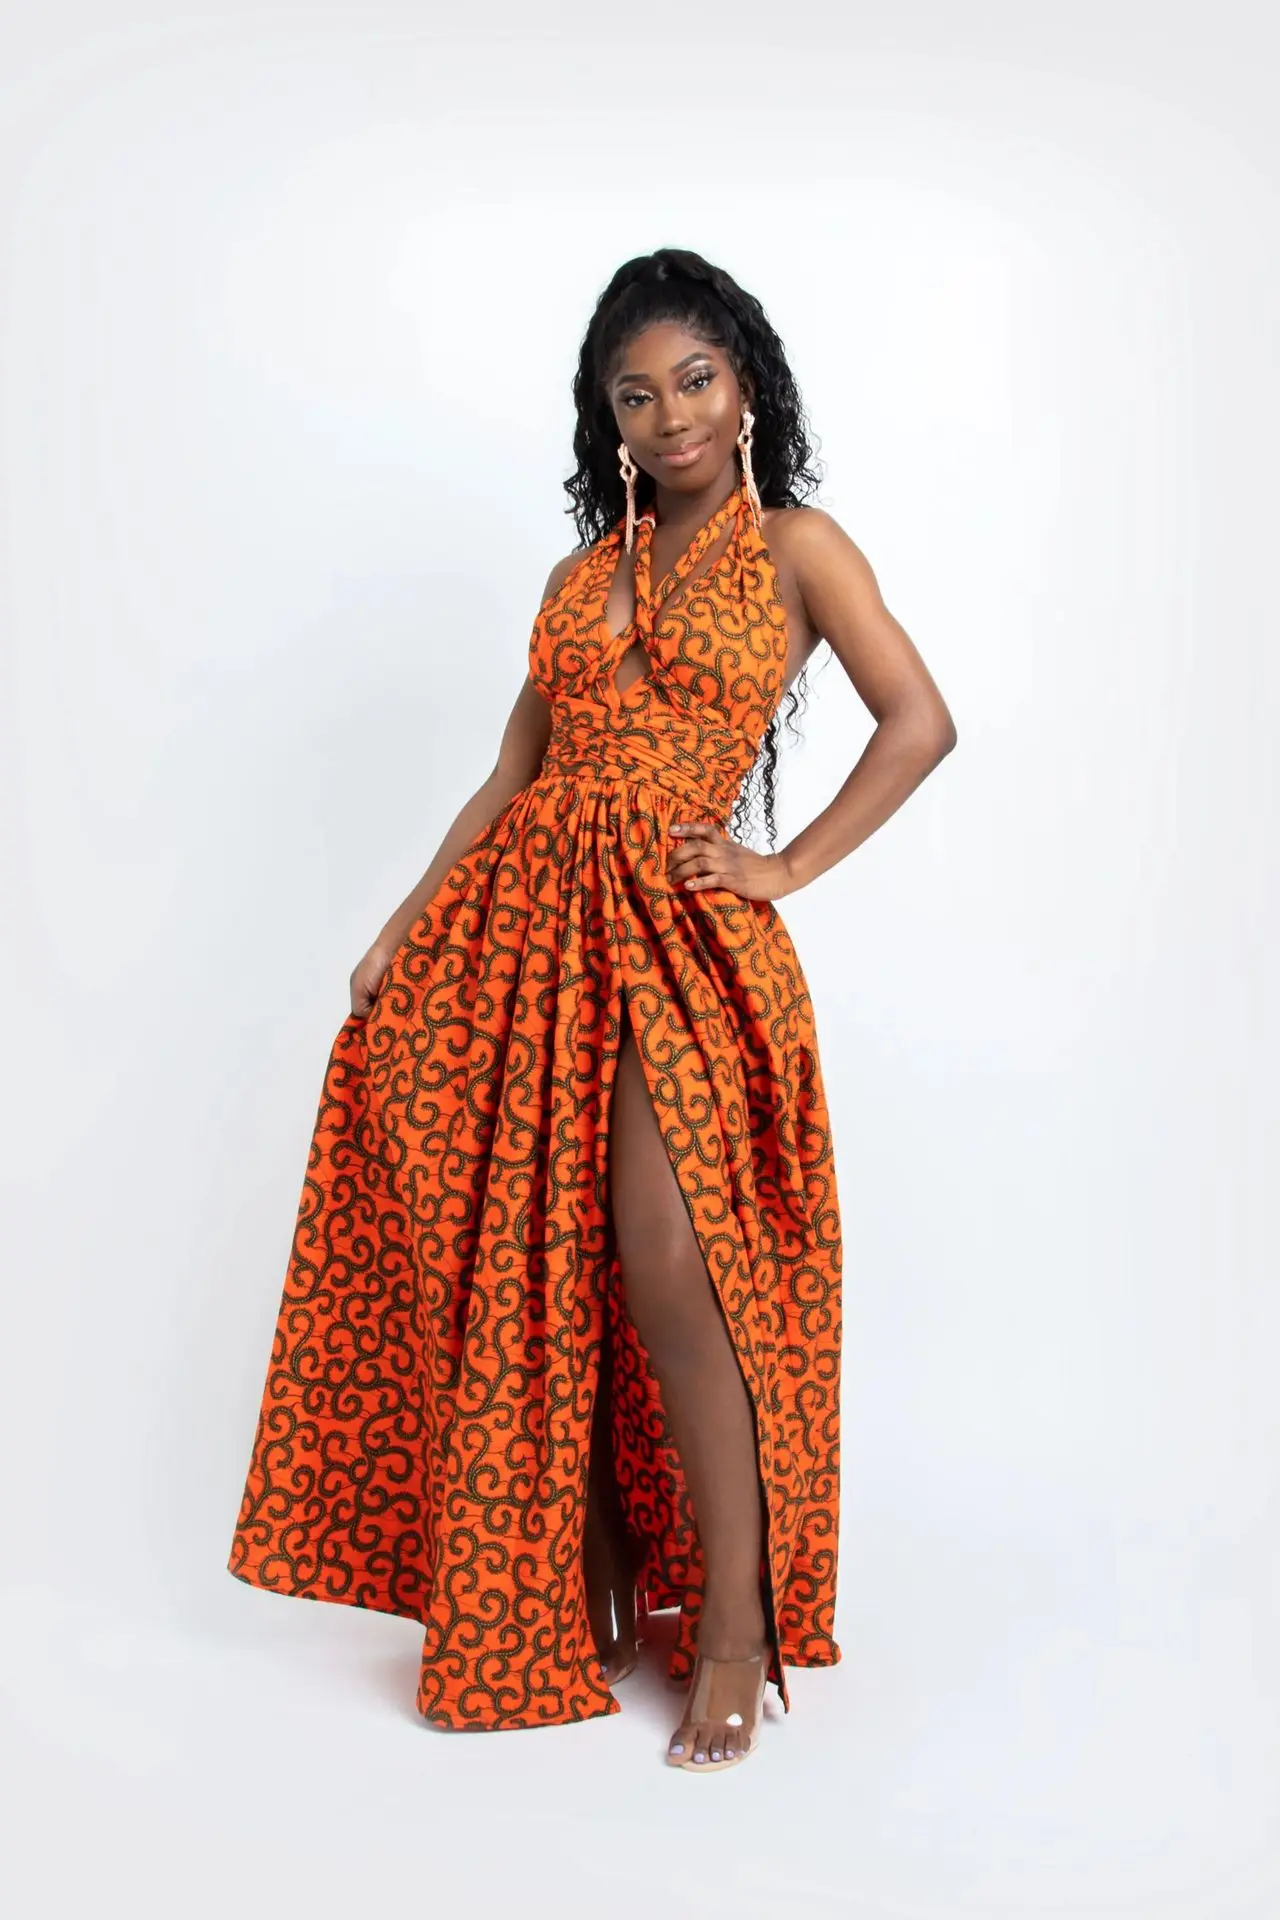 Longue robe africaine wax pour femmes 247